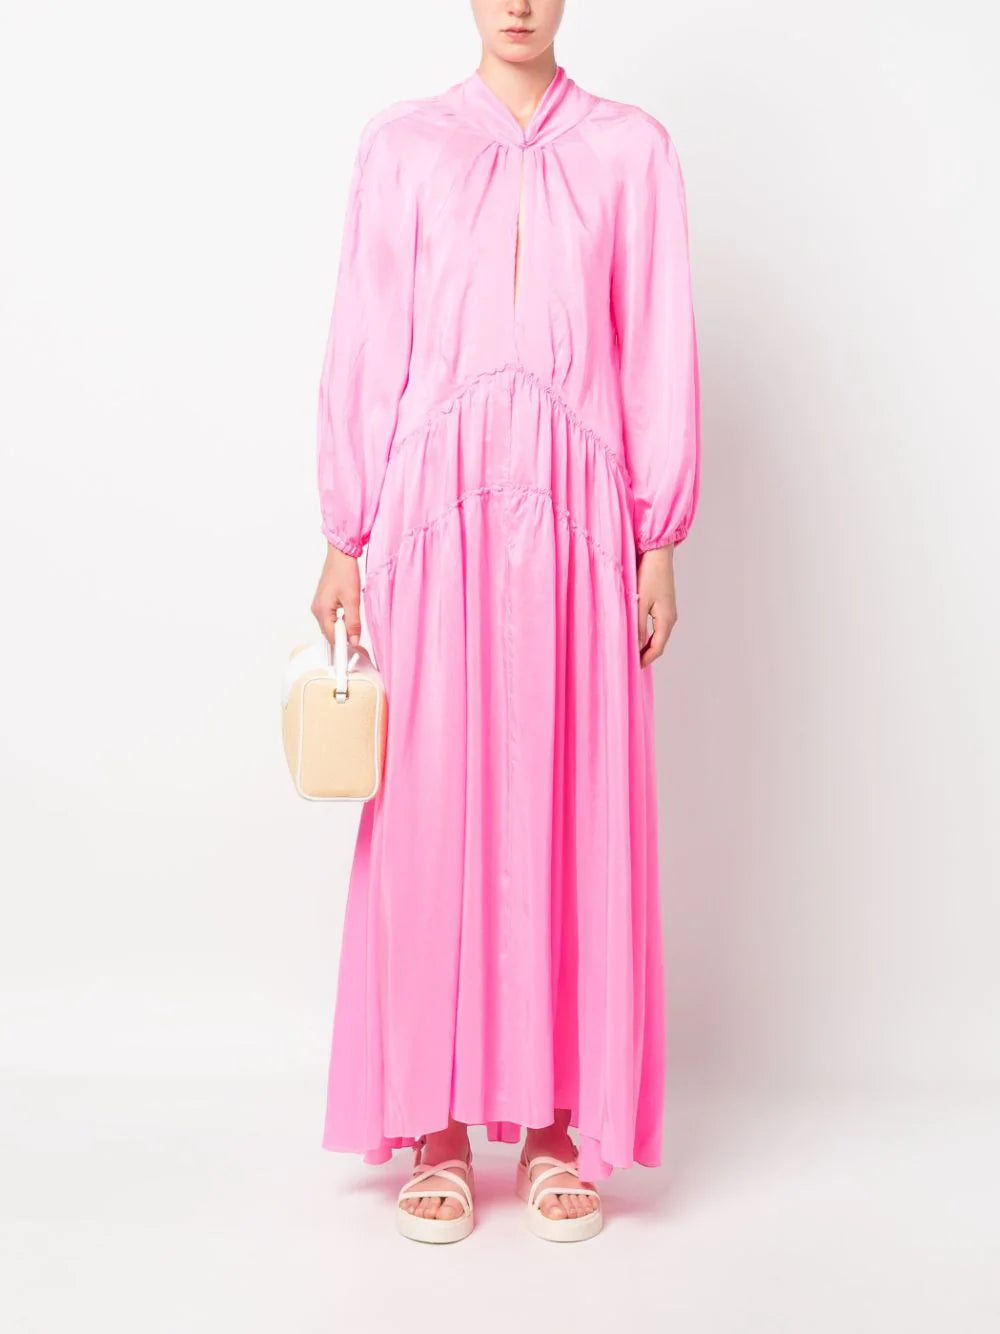 Silk long sleeves dress, pink